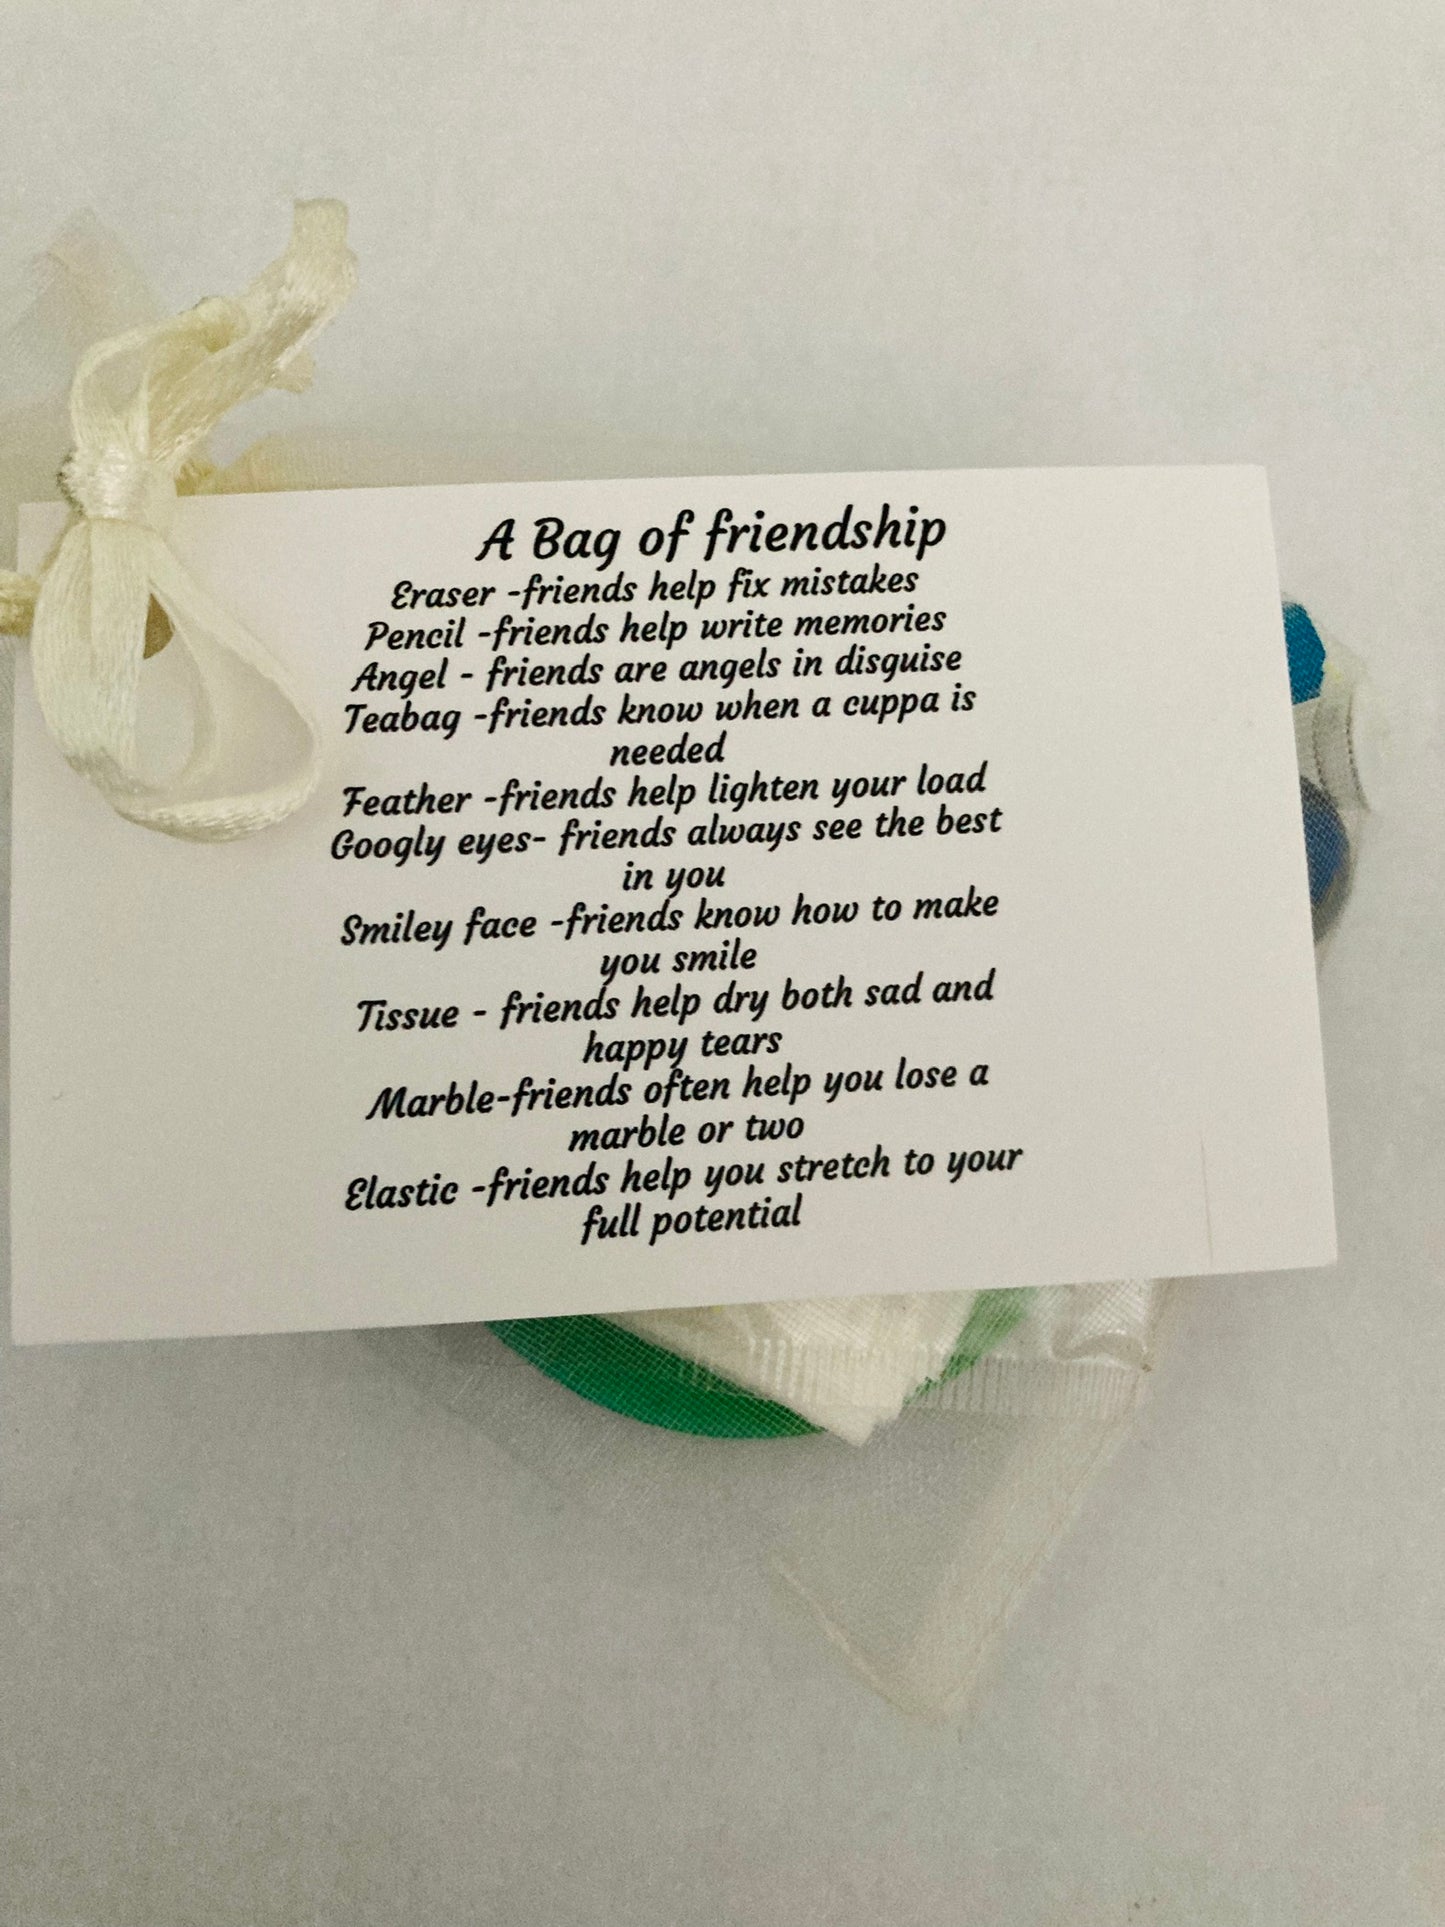 A bag of friendship